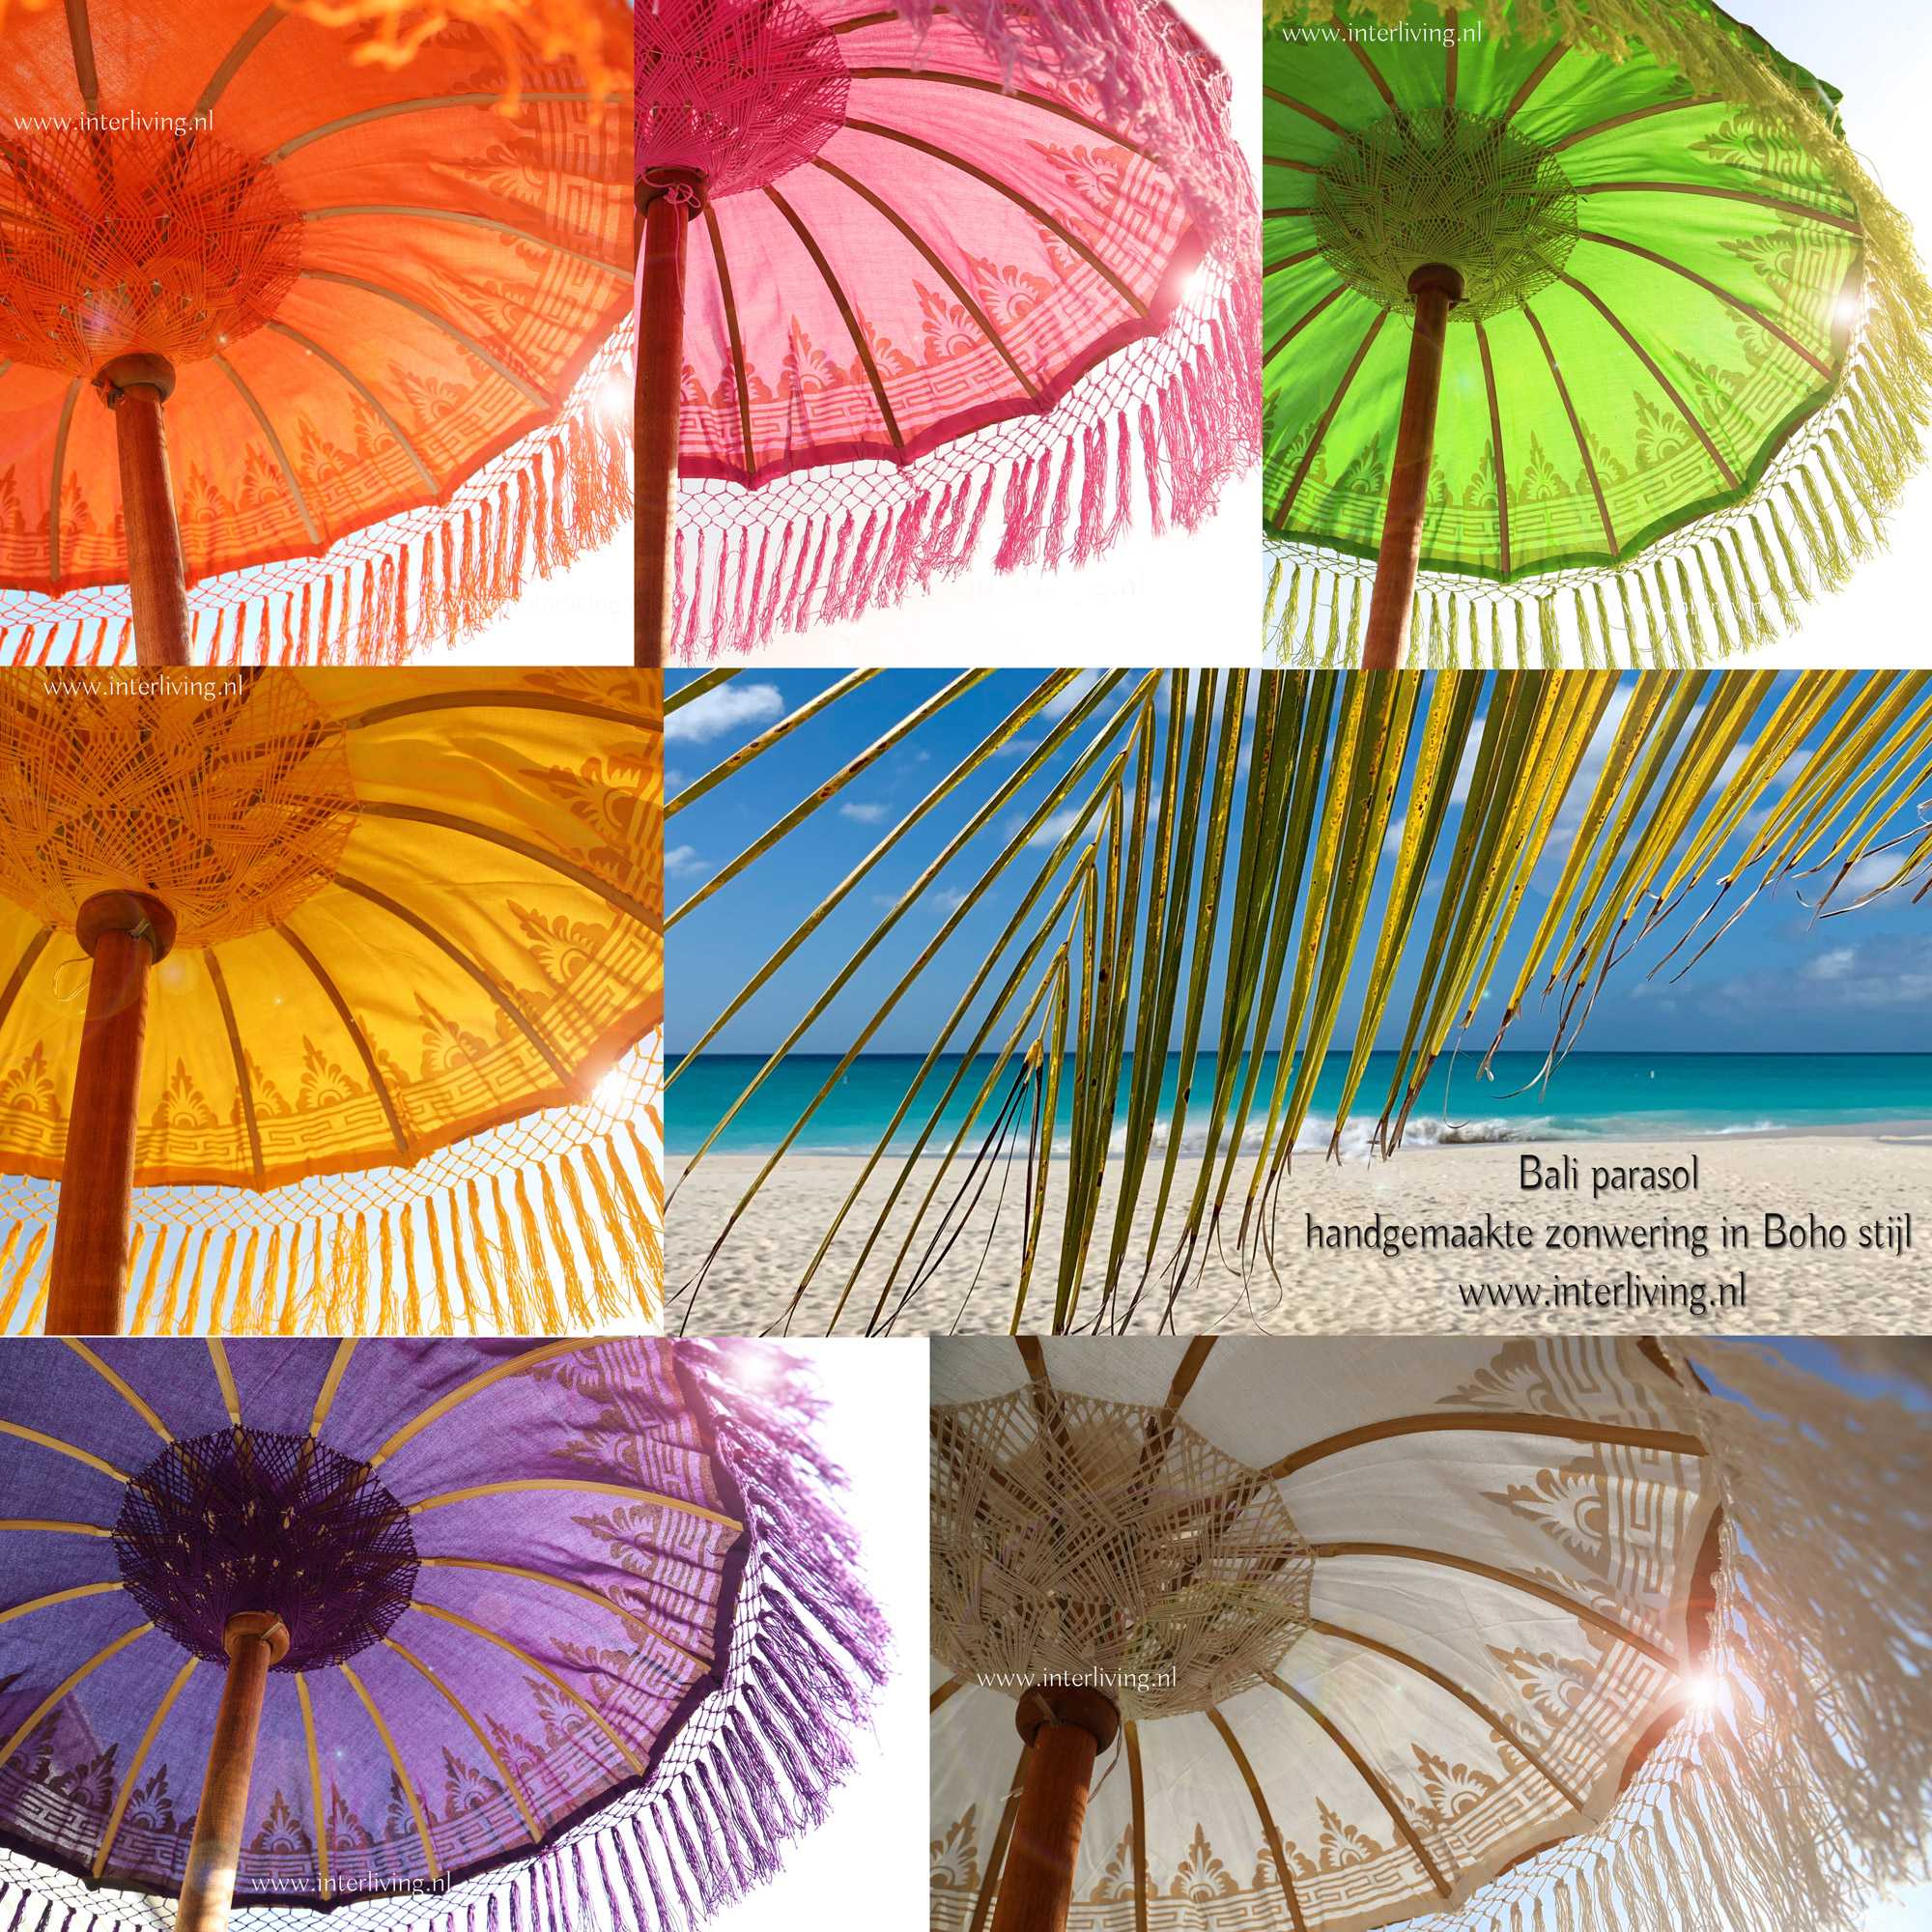 acre nachtmerrie te rechtvaardigen Parasol uit Bali met goud verf, versierde rand met fringed kwastjes